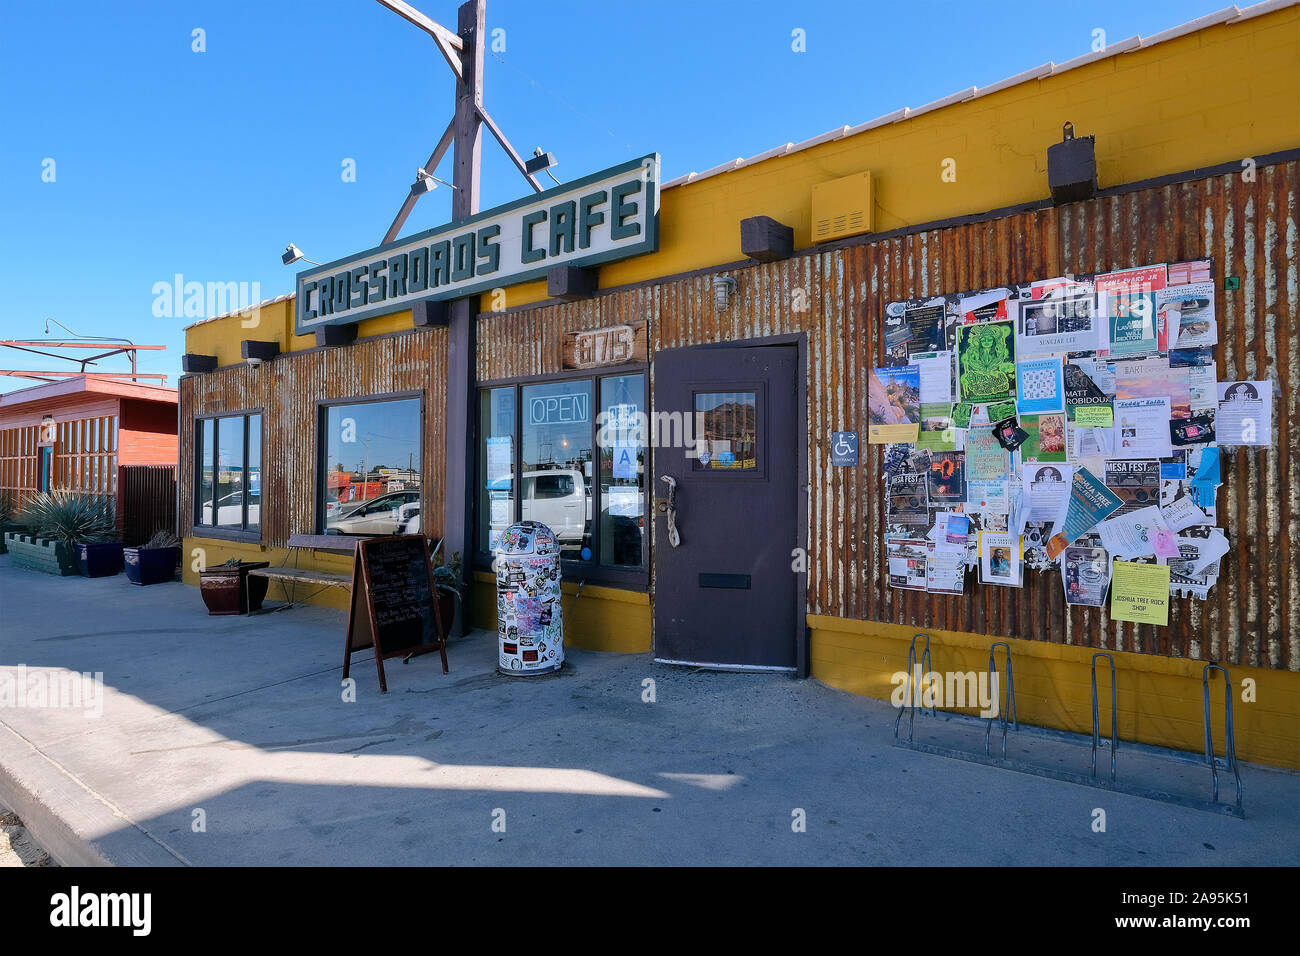 Kreuzung Cafe in Yucca Valley, Joshua Tree, Kalifornien, USA Stockfoto